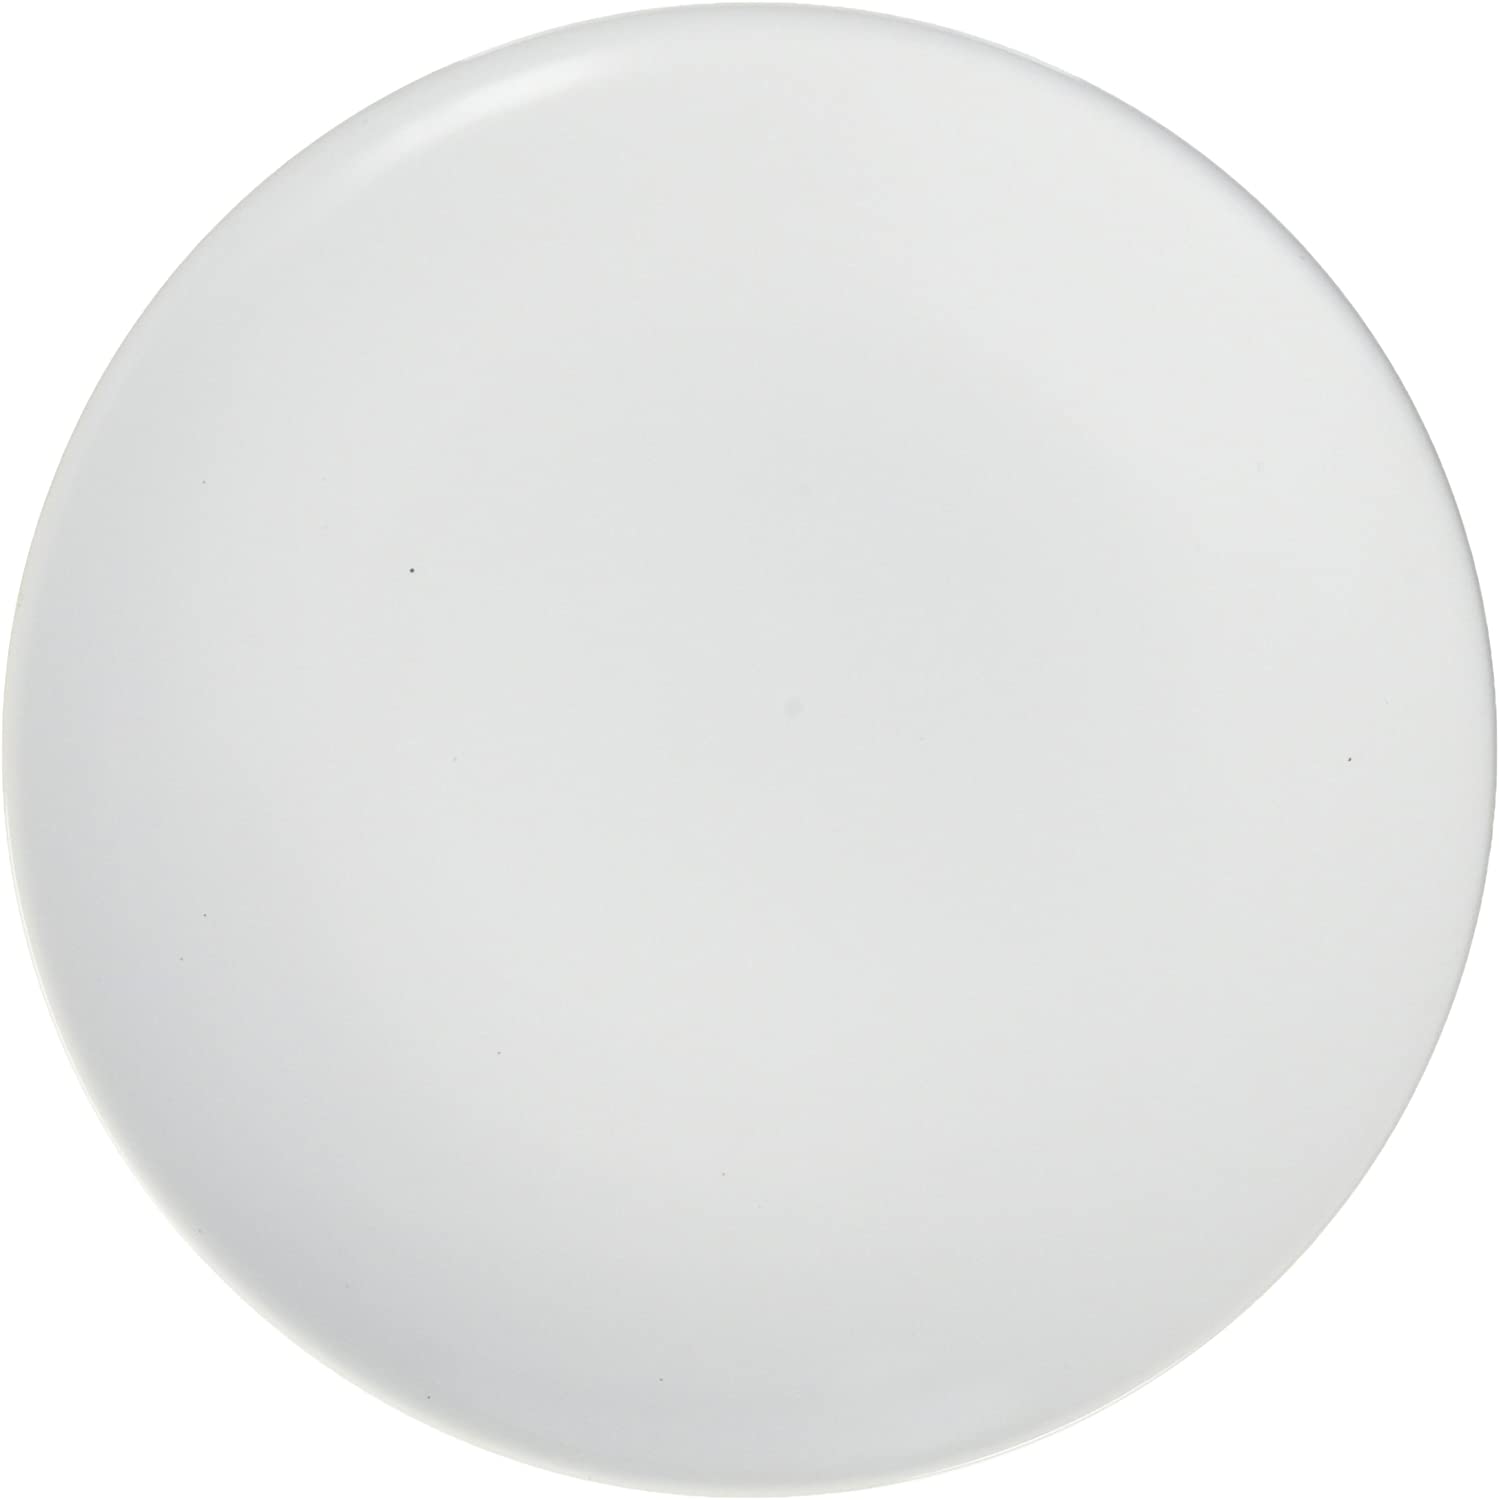 Kuhn Rikon 32223 Fondue Plate, Clay, White, 4 x 4 x 15 cm